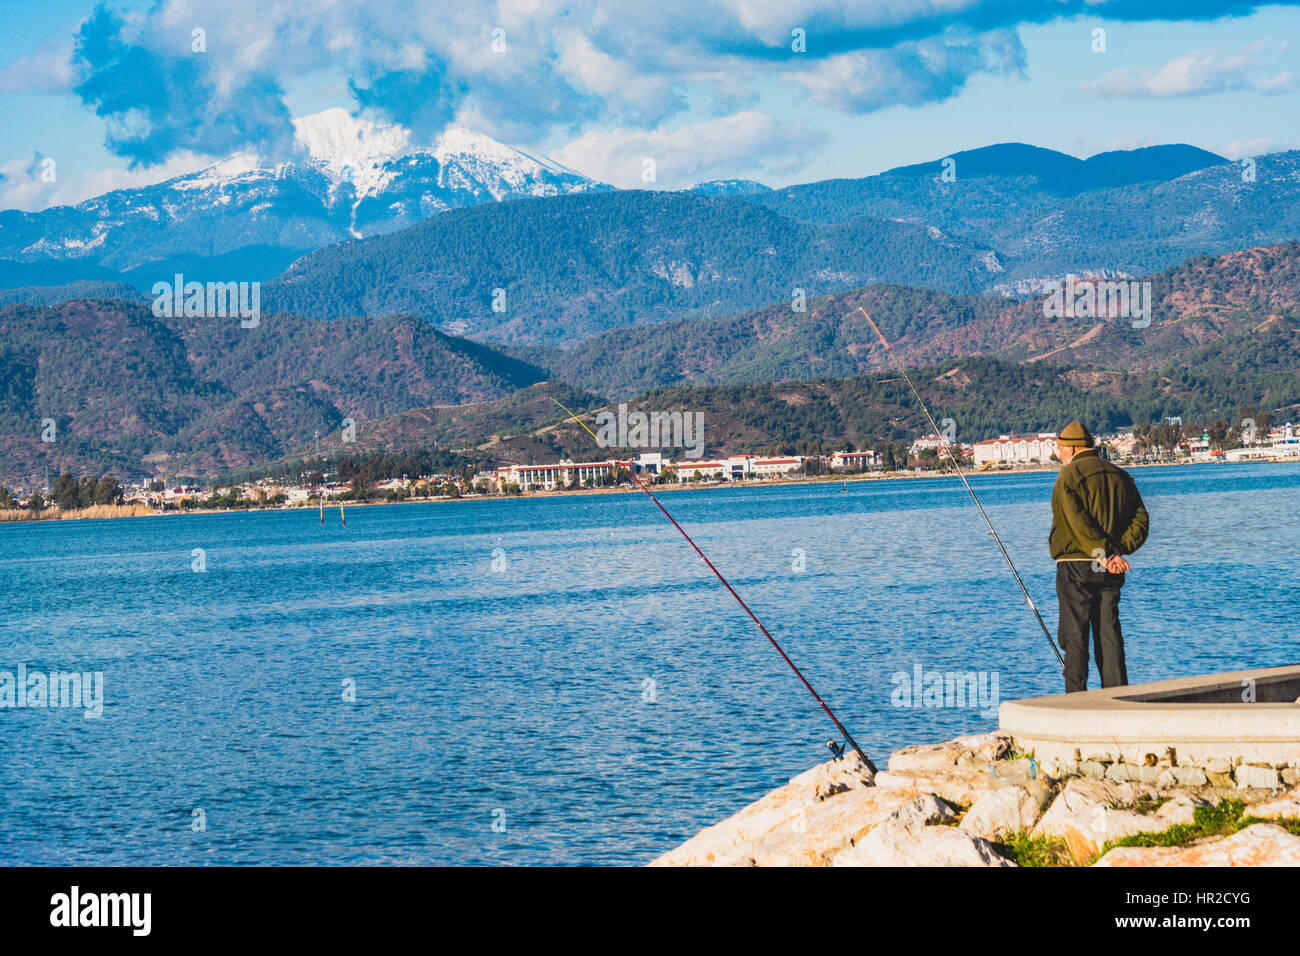 Sale-acqua di pesca in FETHIYE Turchia, pesca sportiva in Turchia. deniz balkiciligi,amator spor balikcilik Foto Stock